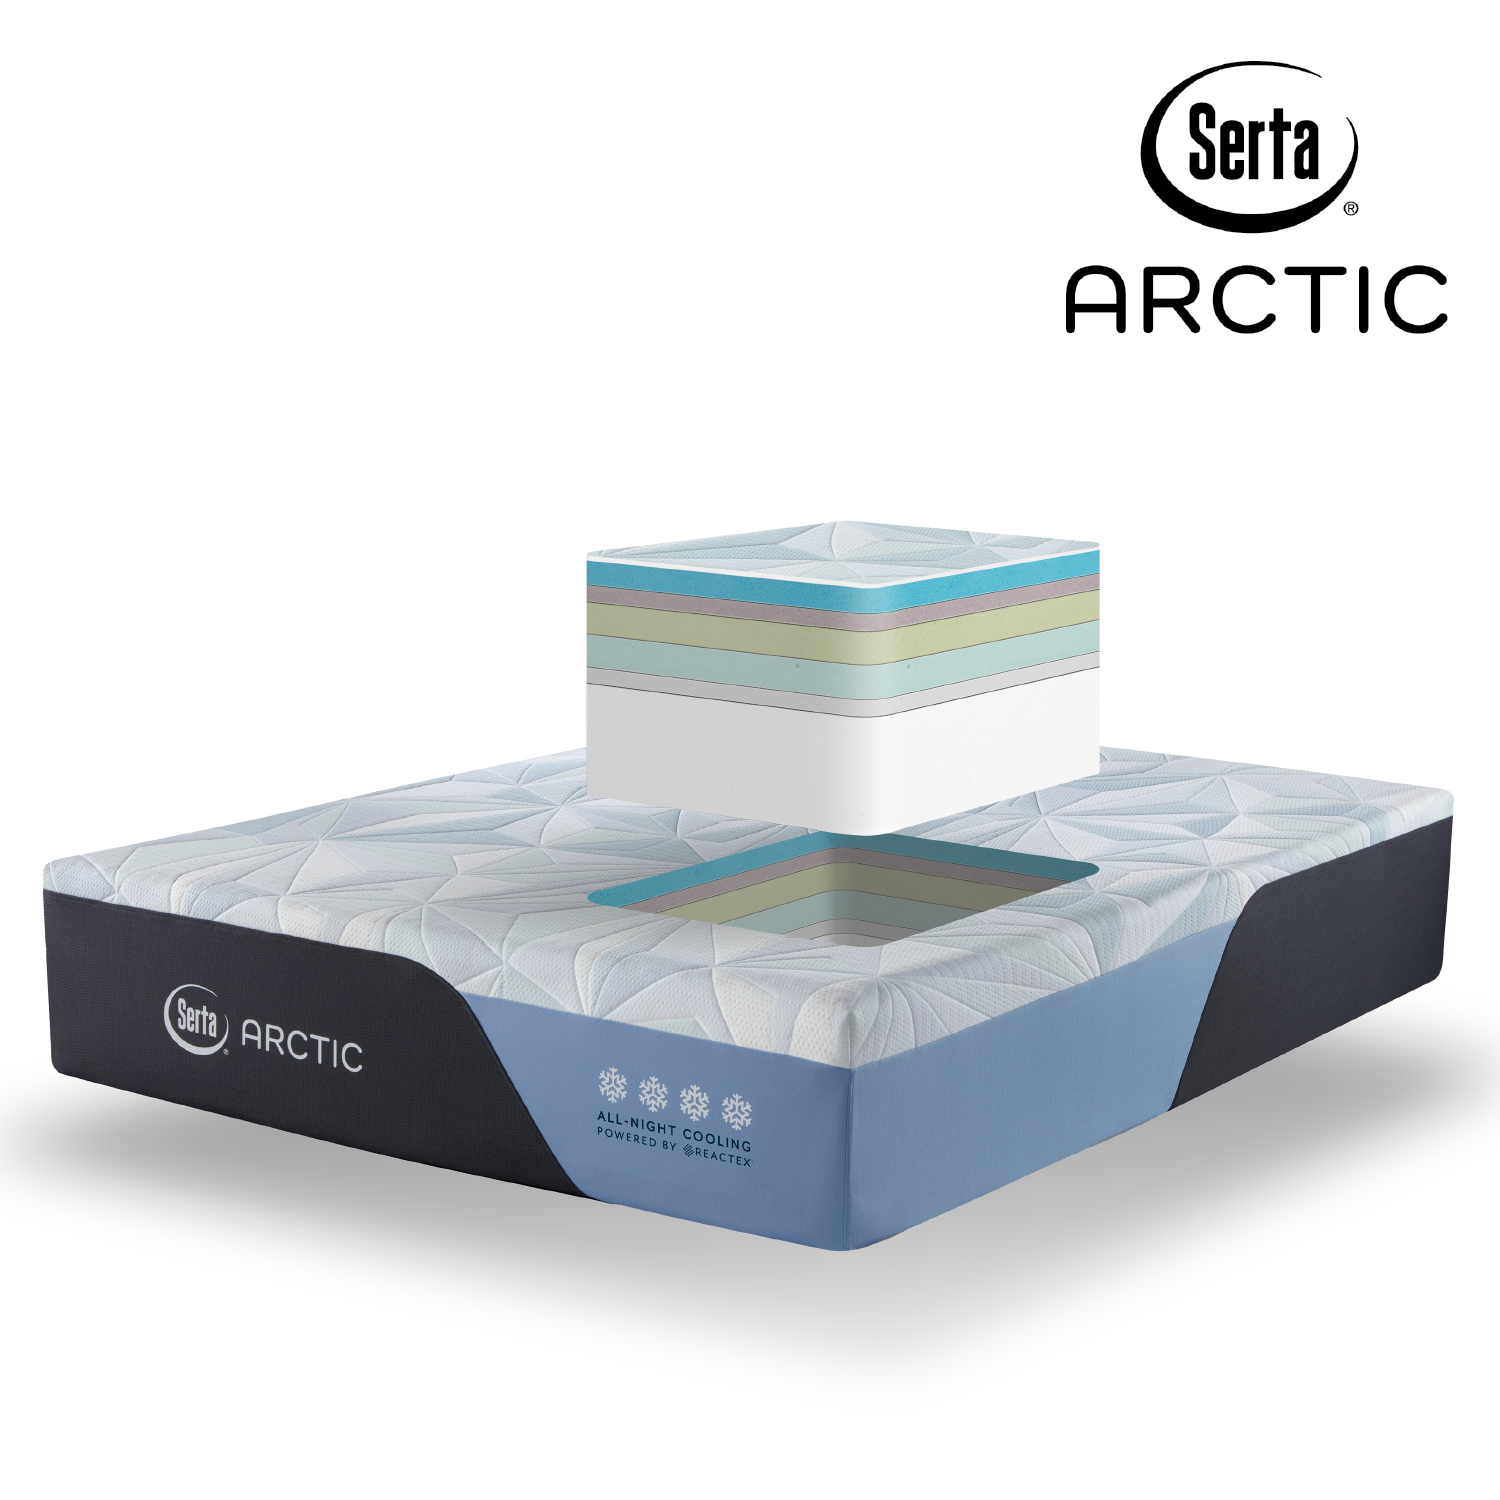 Serta Arctic Premier 14.5" Firm Mattress